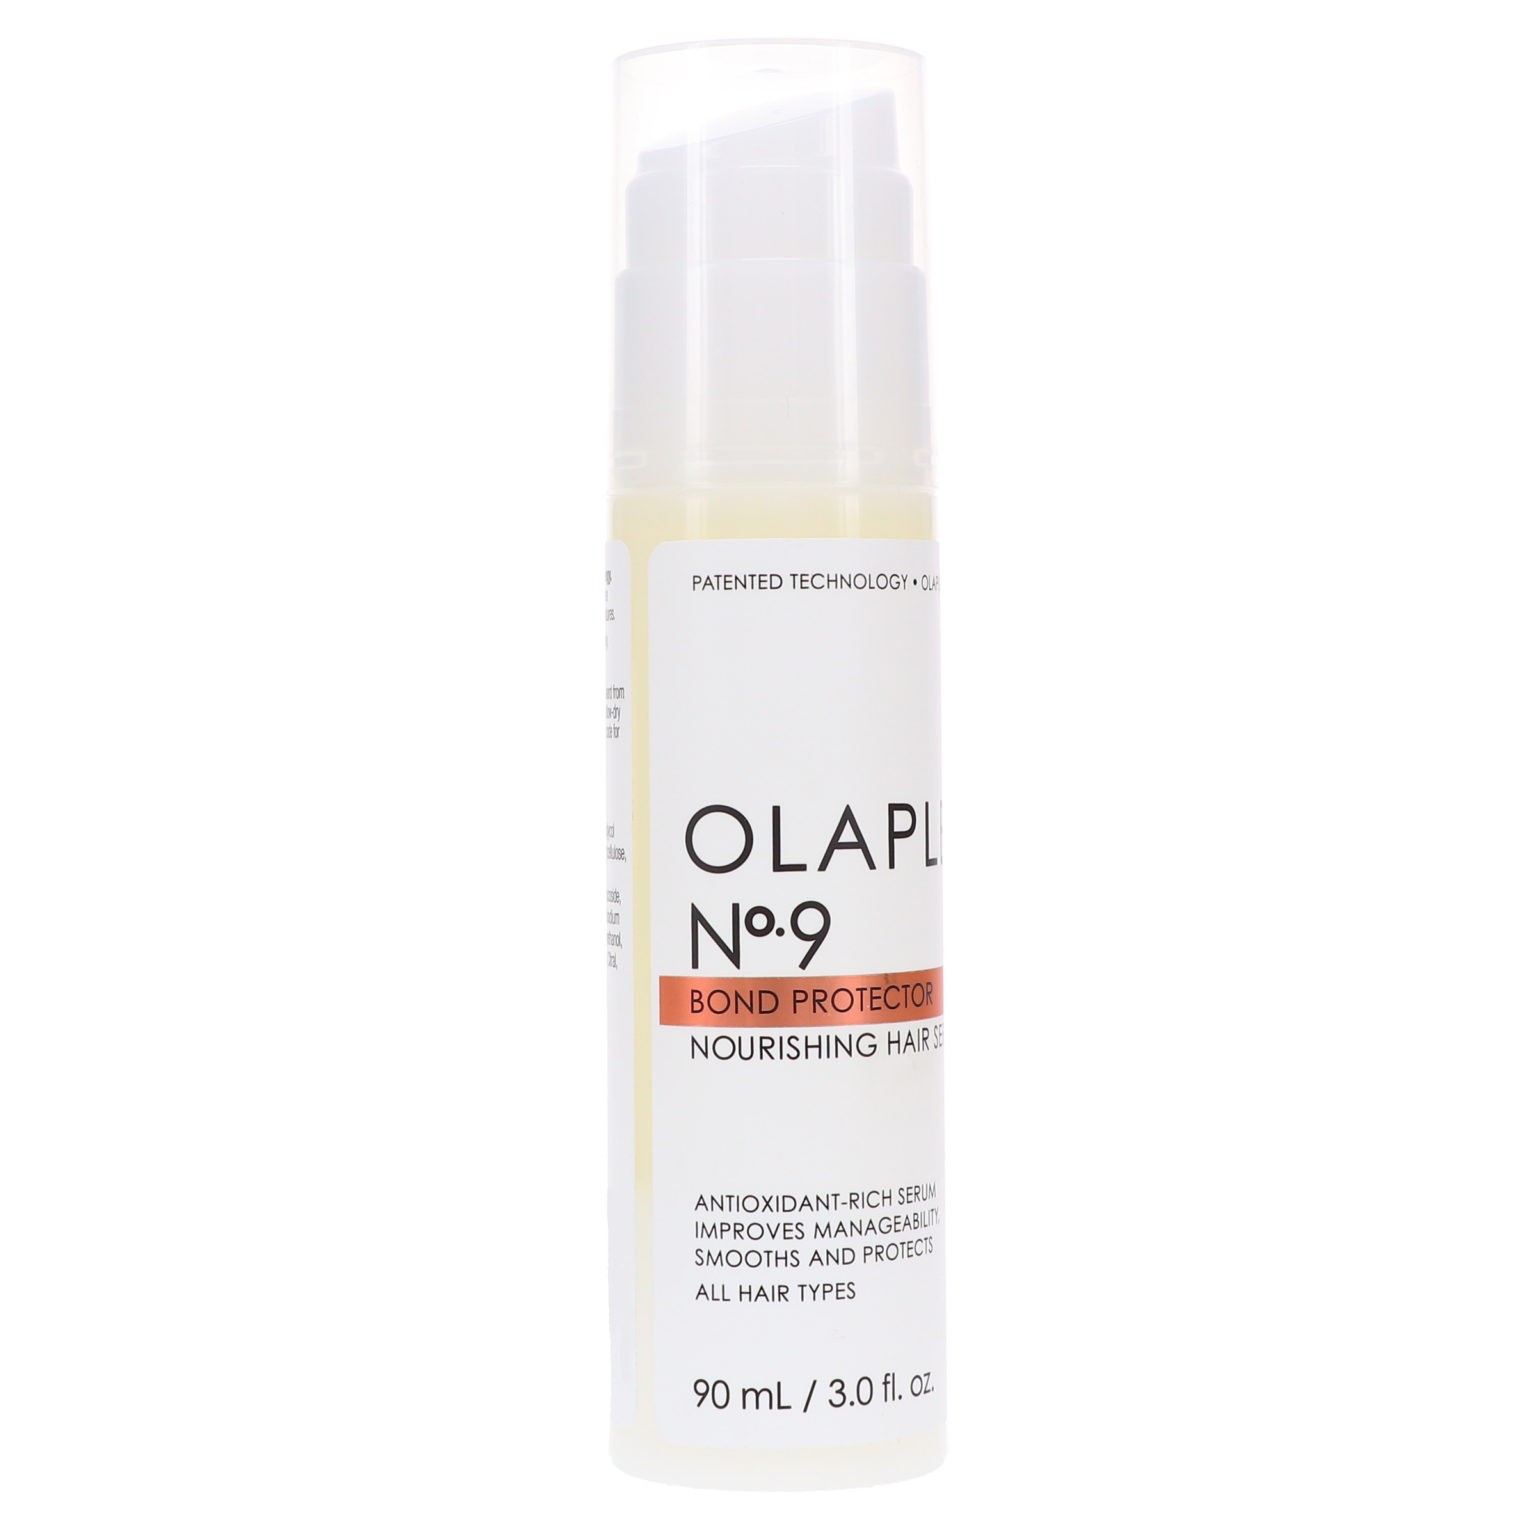 Billede af OLAPLEX No.9 Bond Protector Nourishing Hair Serum - 90 ml hos Staybeautiful